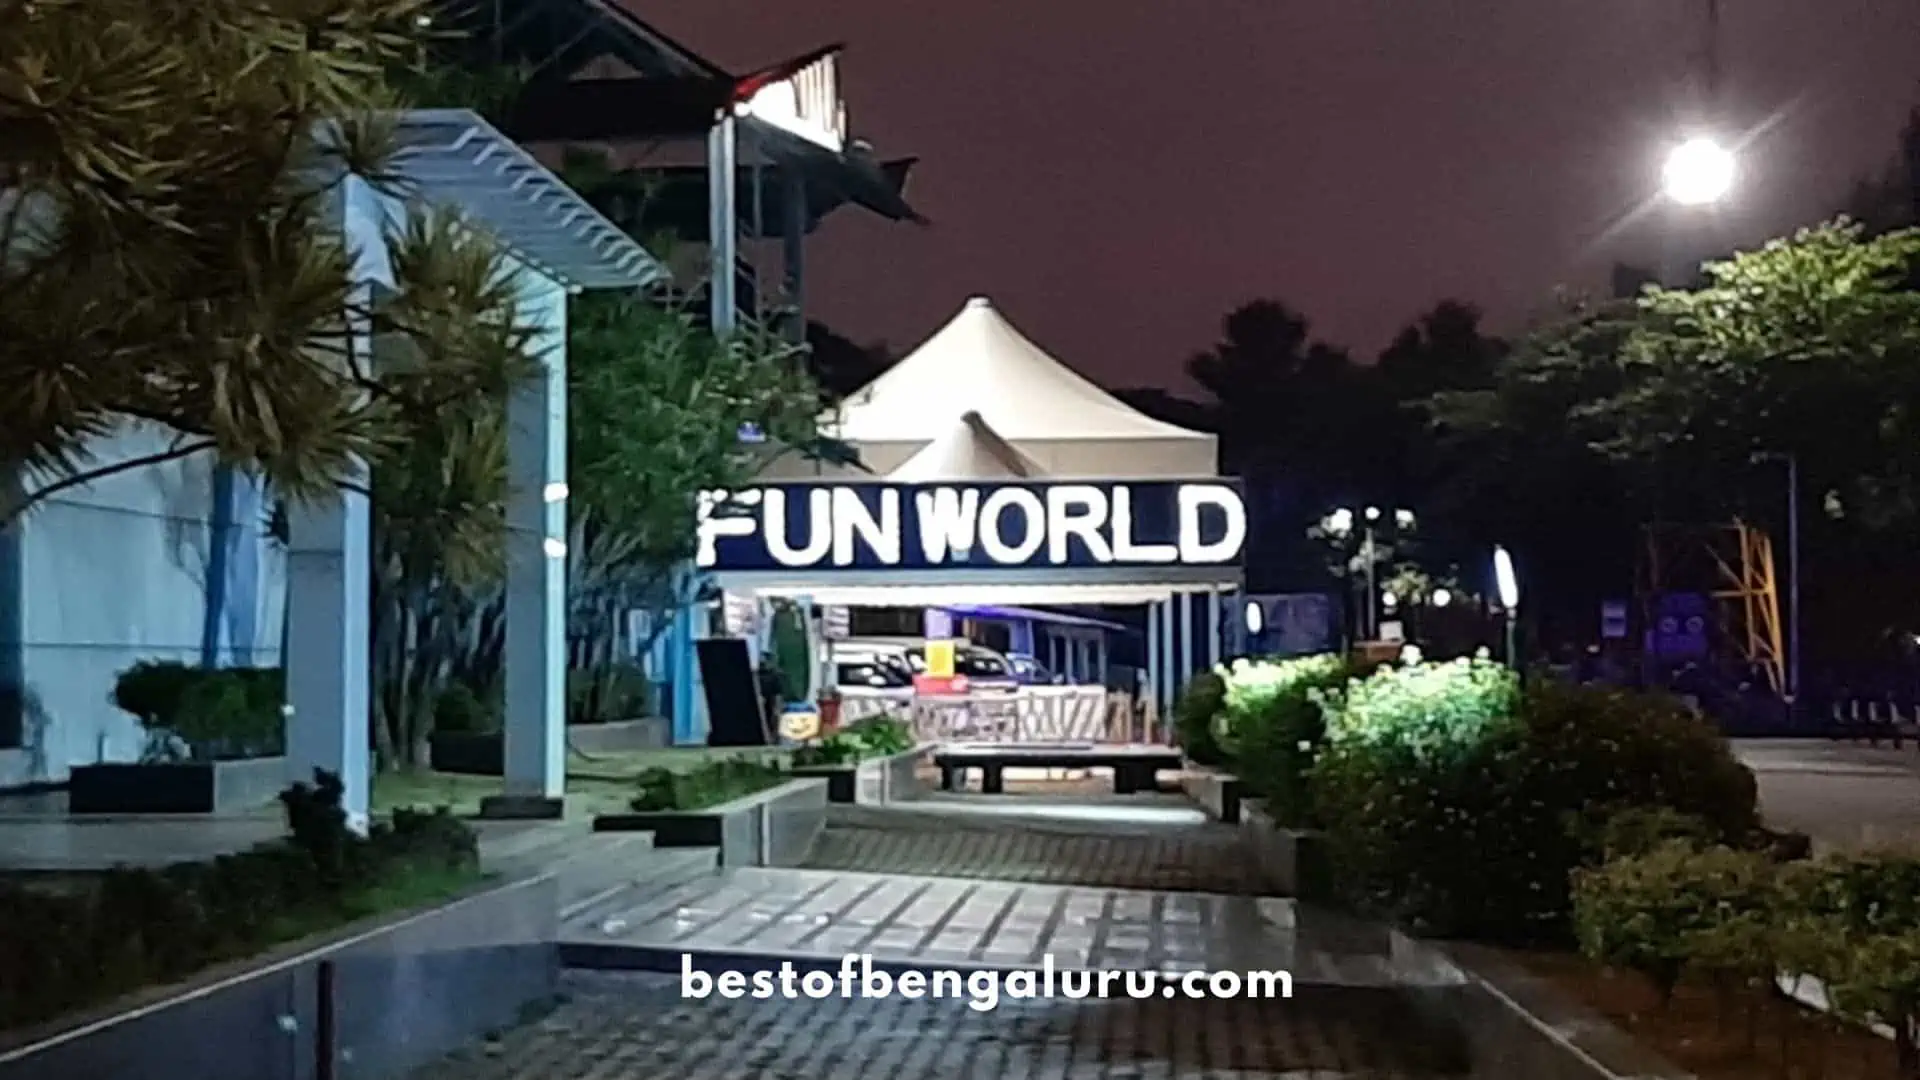 Fun World Bangalore Amusement Park Tickets, Timings, Rides, Photos and